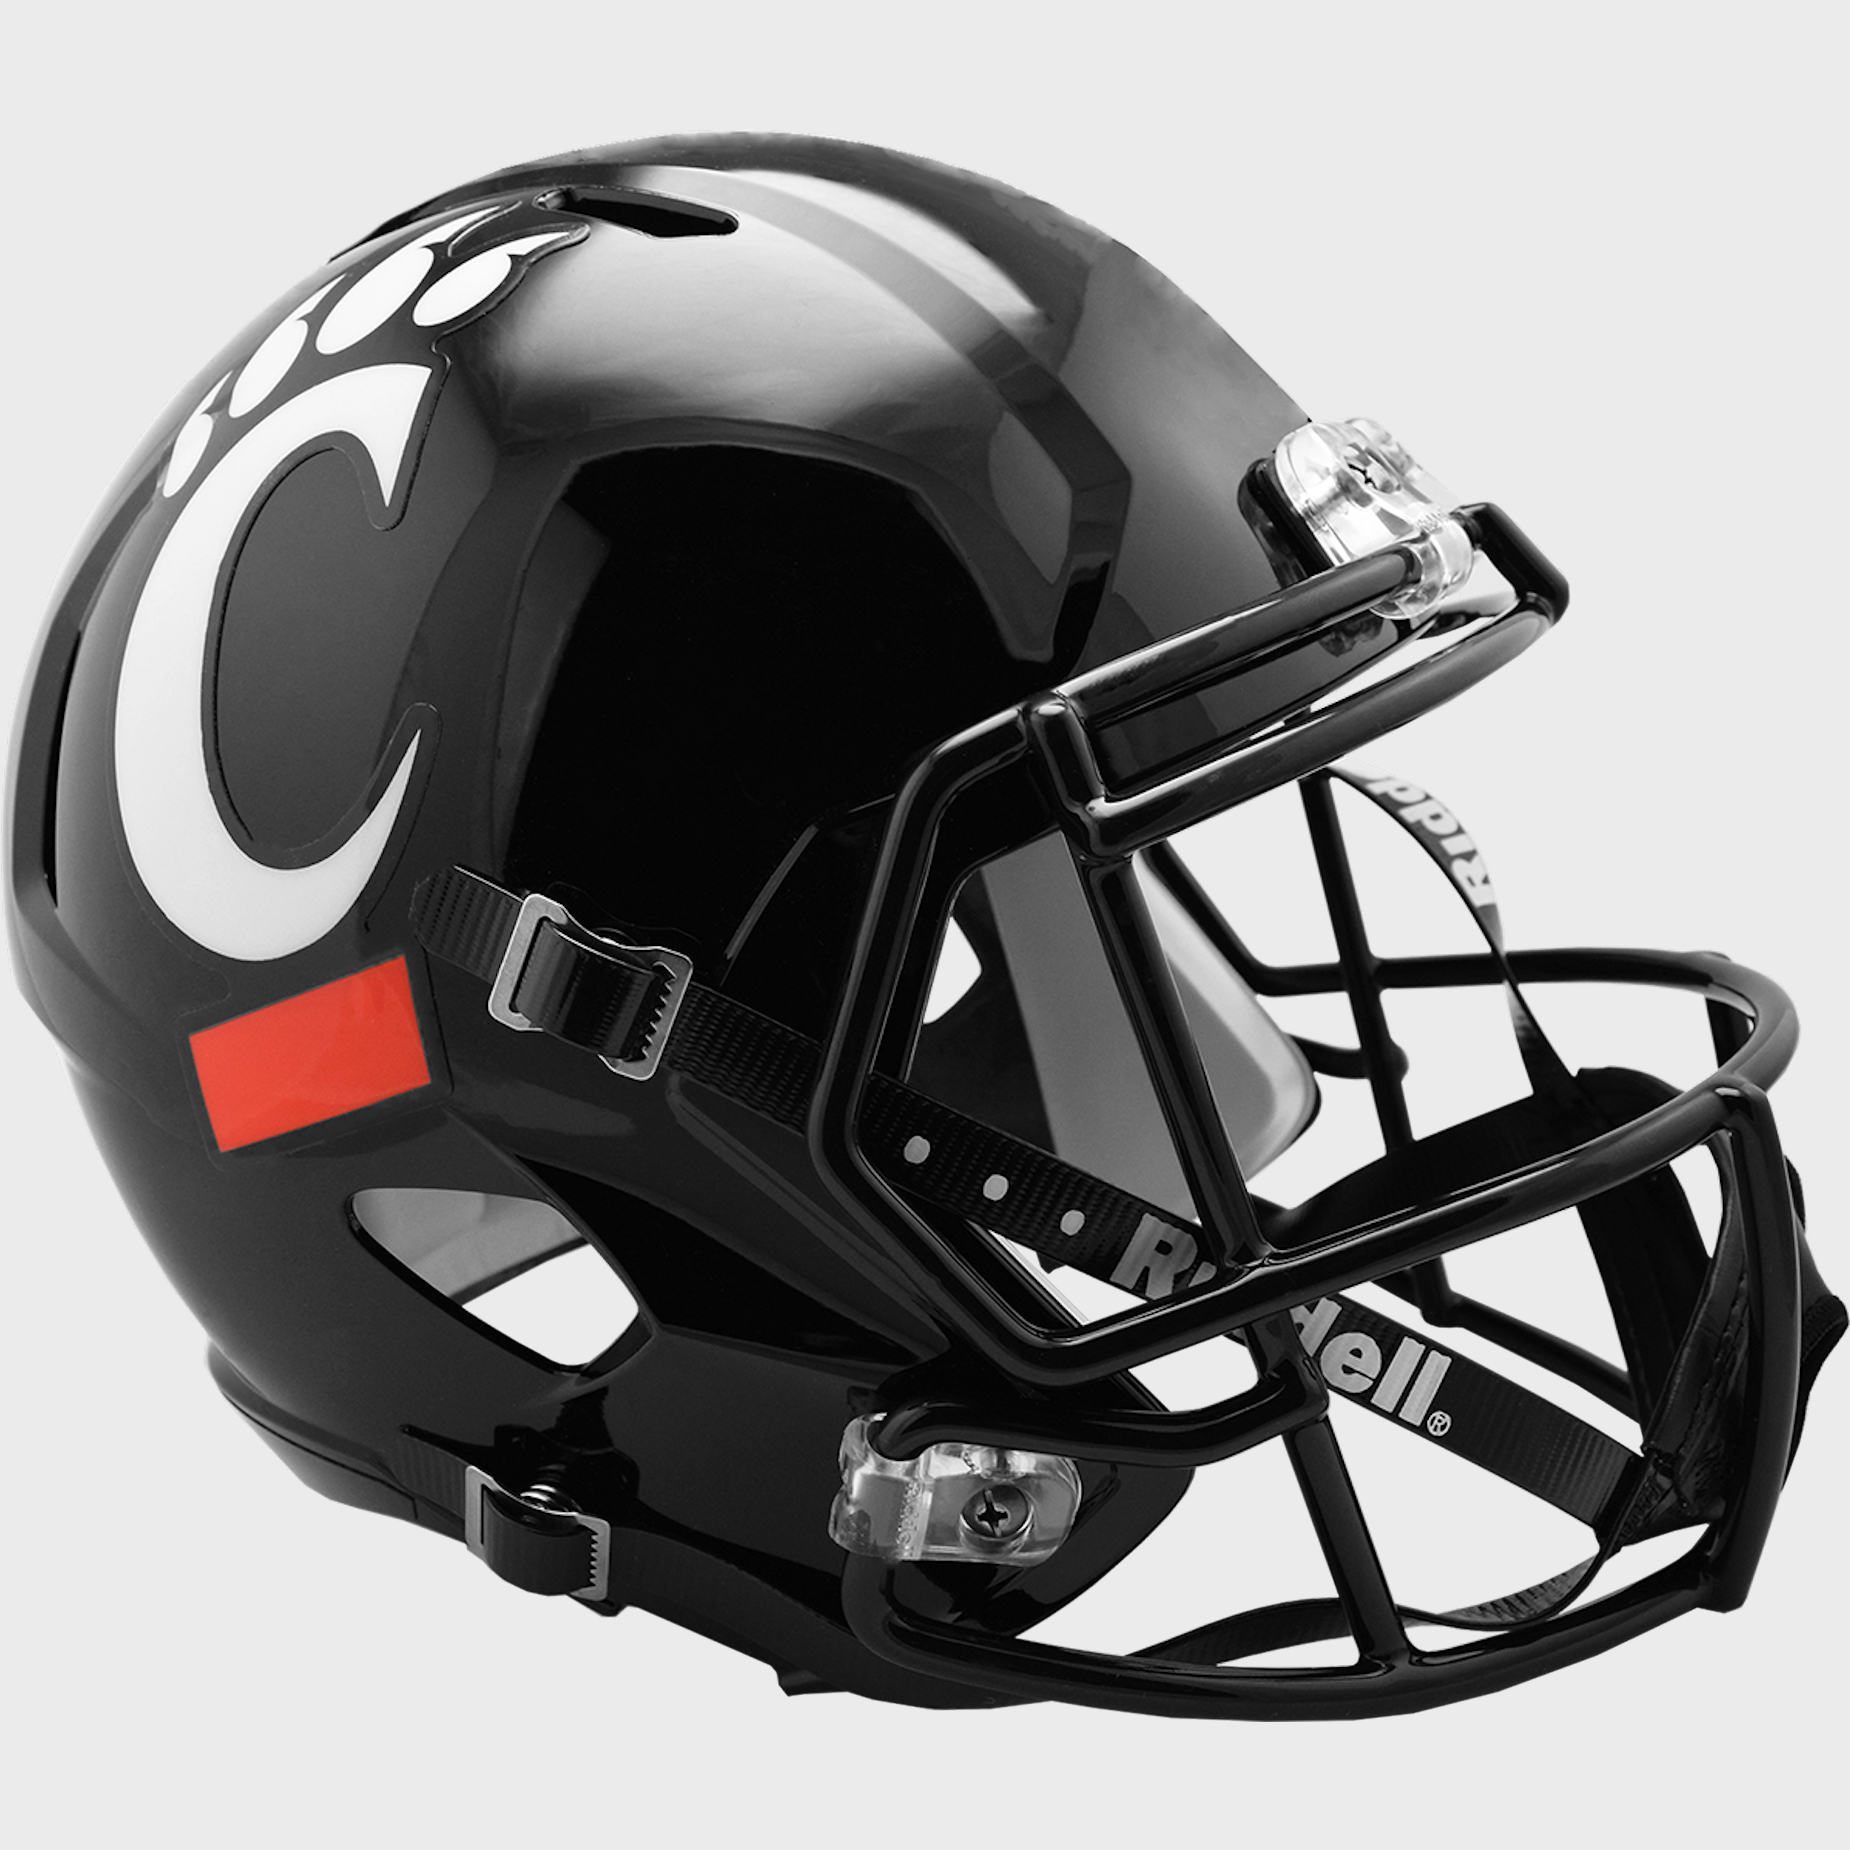 Cincinnati Bearcats Speed Replica Football Helmet